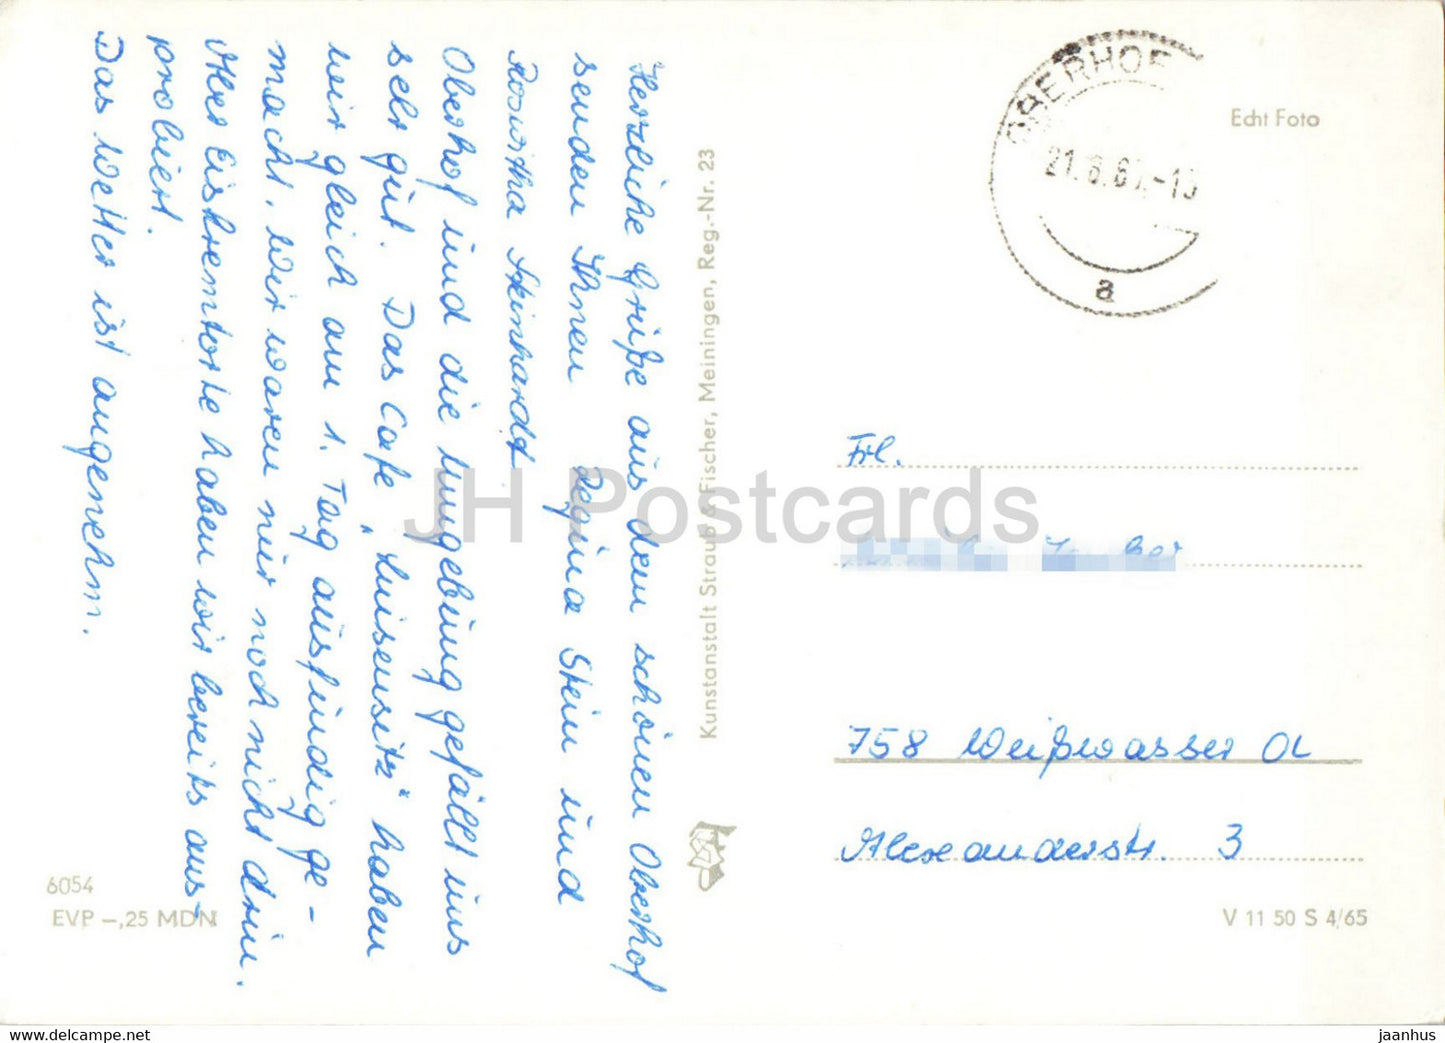 Oberhof im Thur Wald - Ernst Thallman Haus - FDGB Heim Stochanow - old postcard - 1961 - Germany DDR - used